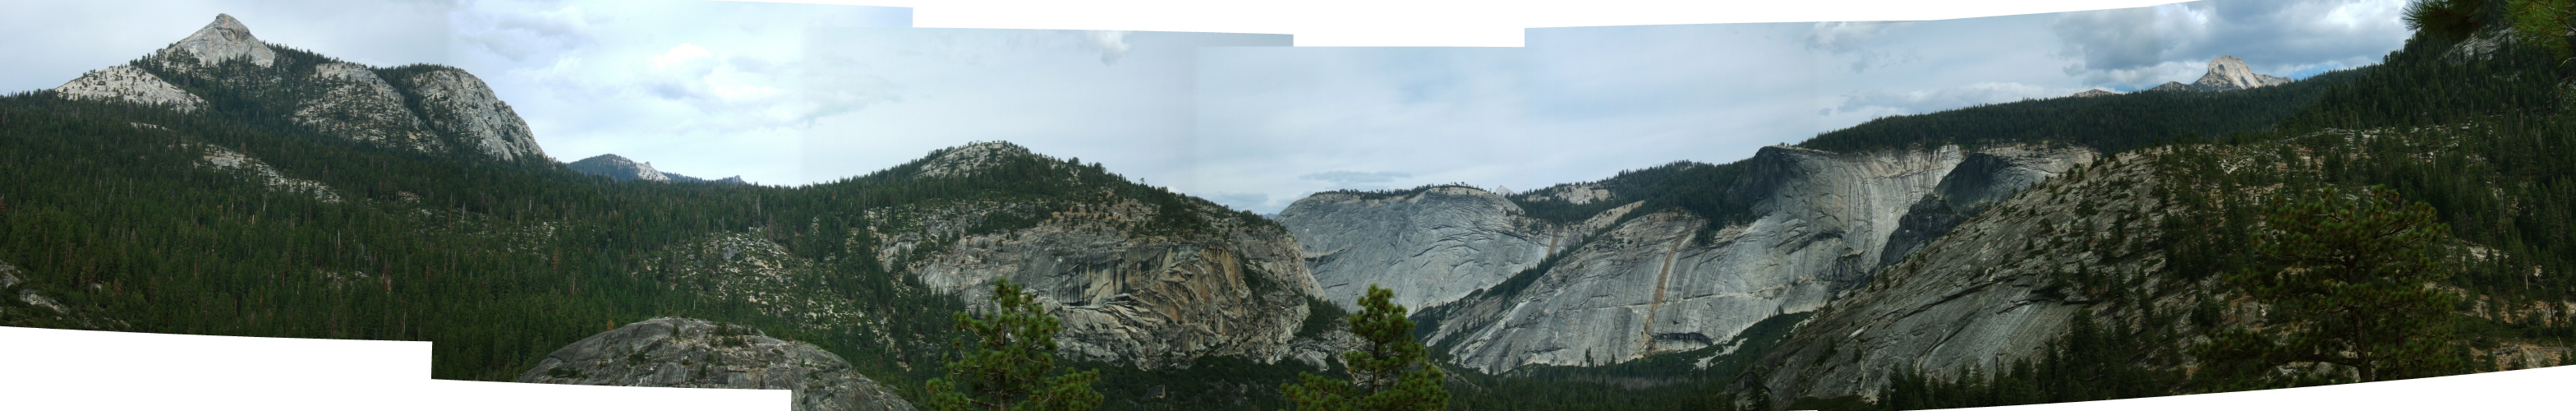 Little Yosemite Panorama.